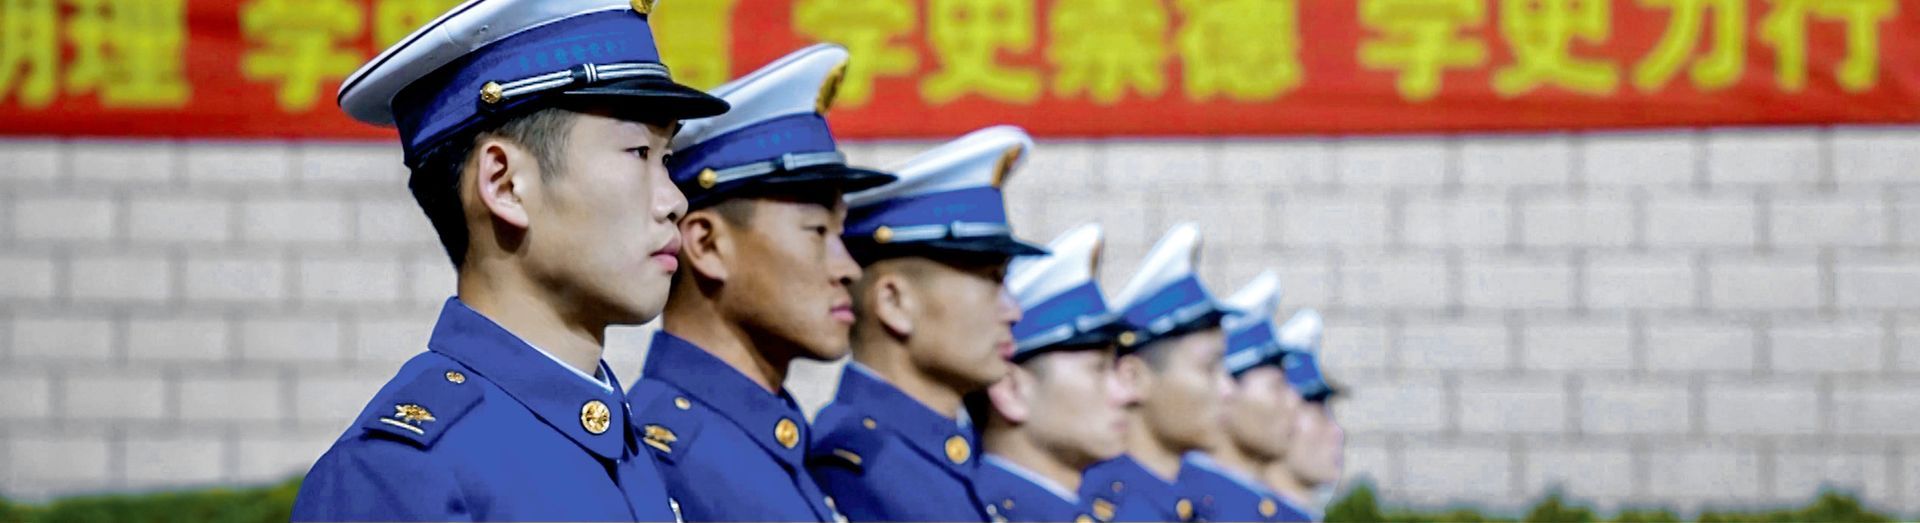 Chinese firefighters in Shanghai in ceremonial uniform as seen in Frontline Shanghai.